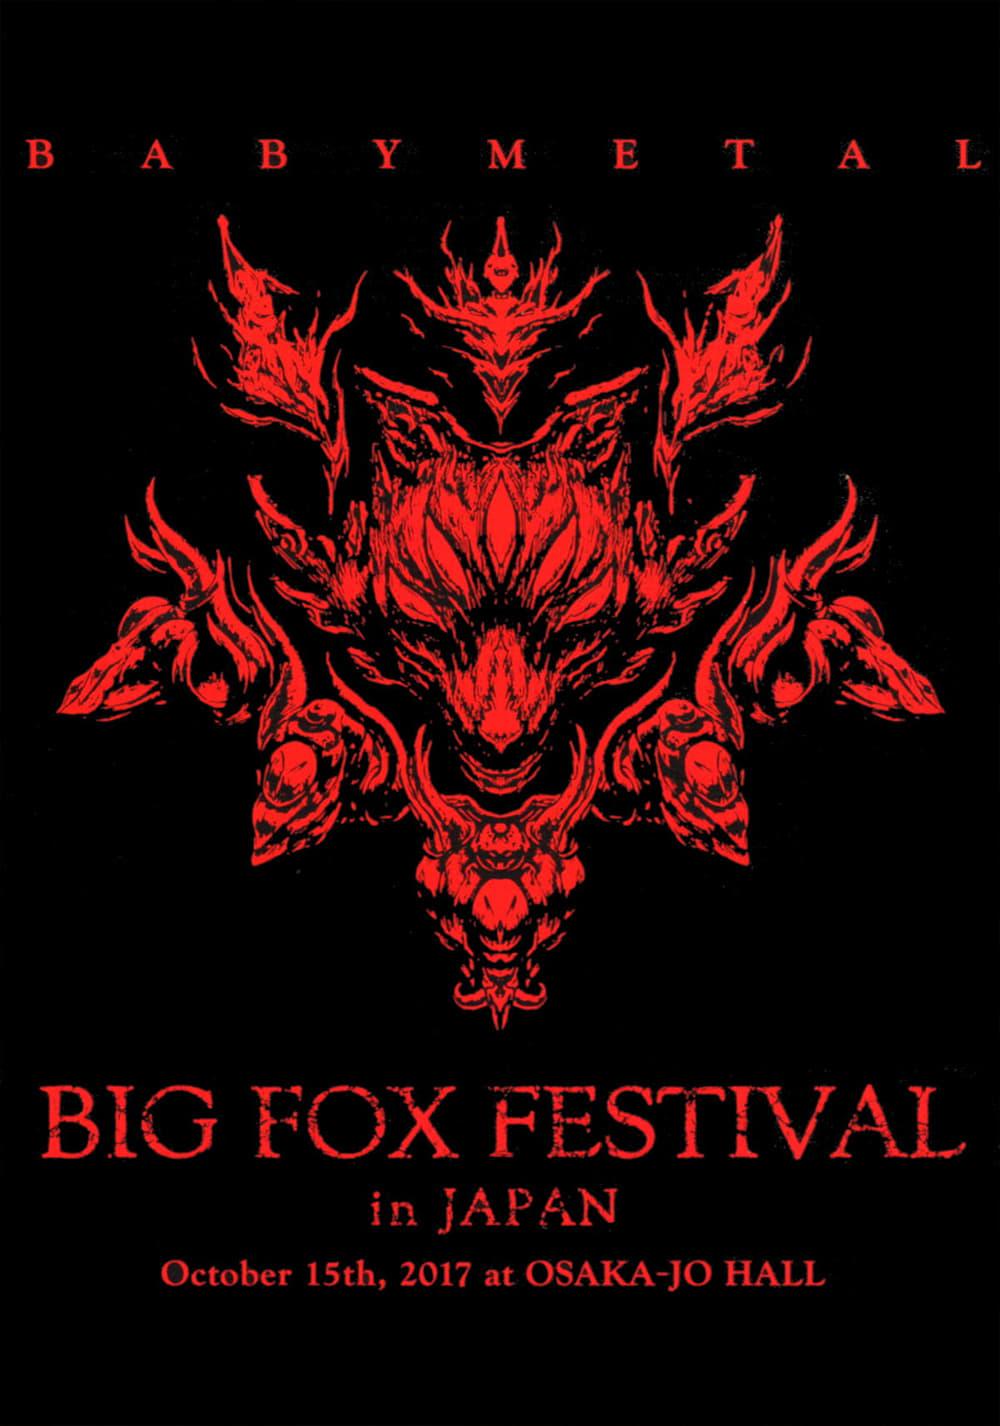 BABYMETAL - Big Fox Festival in Japan poster